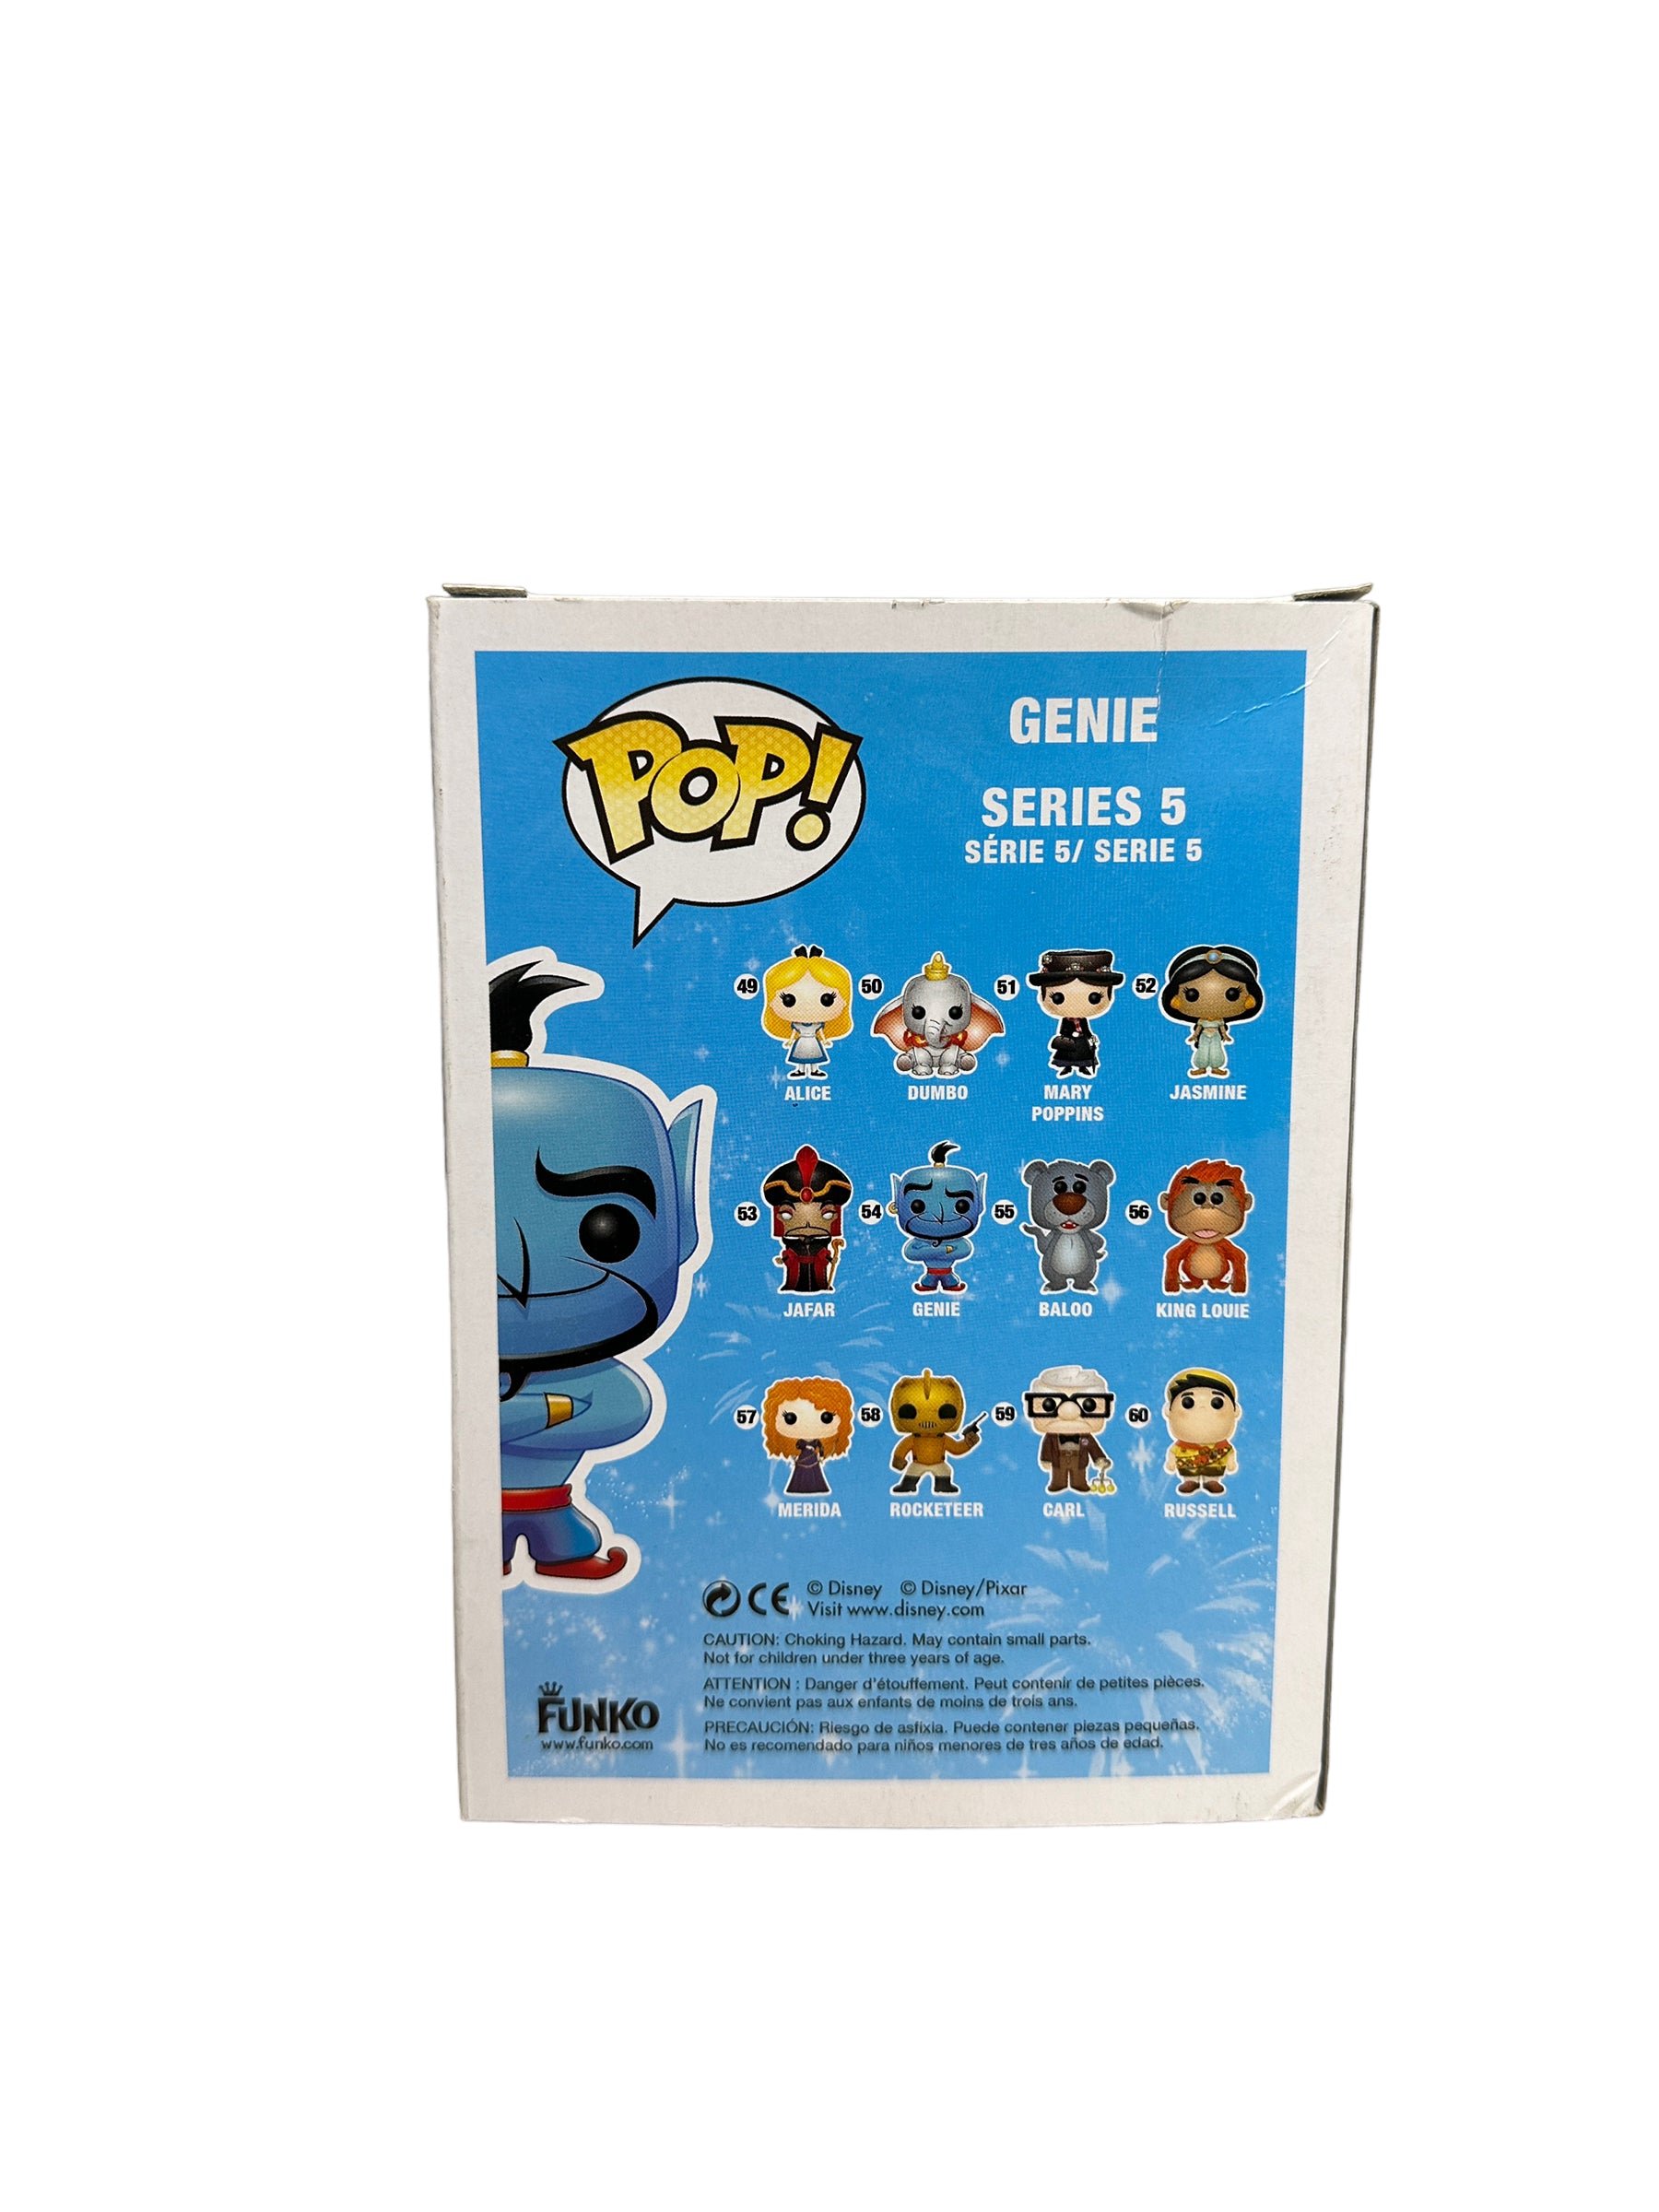 Genie #54 Funko Pop! - Disney Series 5 - 2013 Pop! - Condition 6.5/10